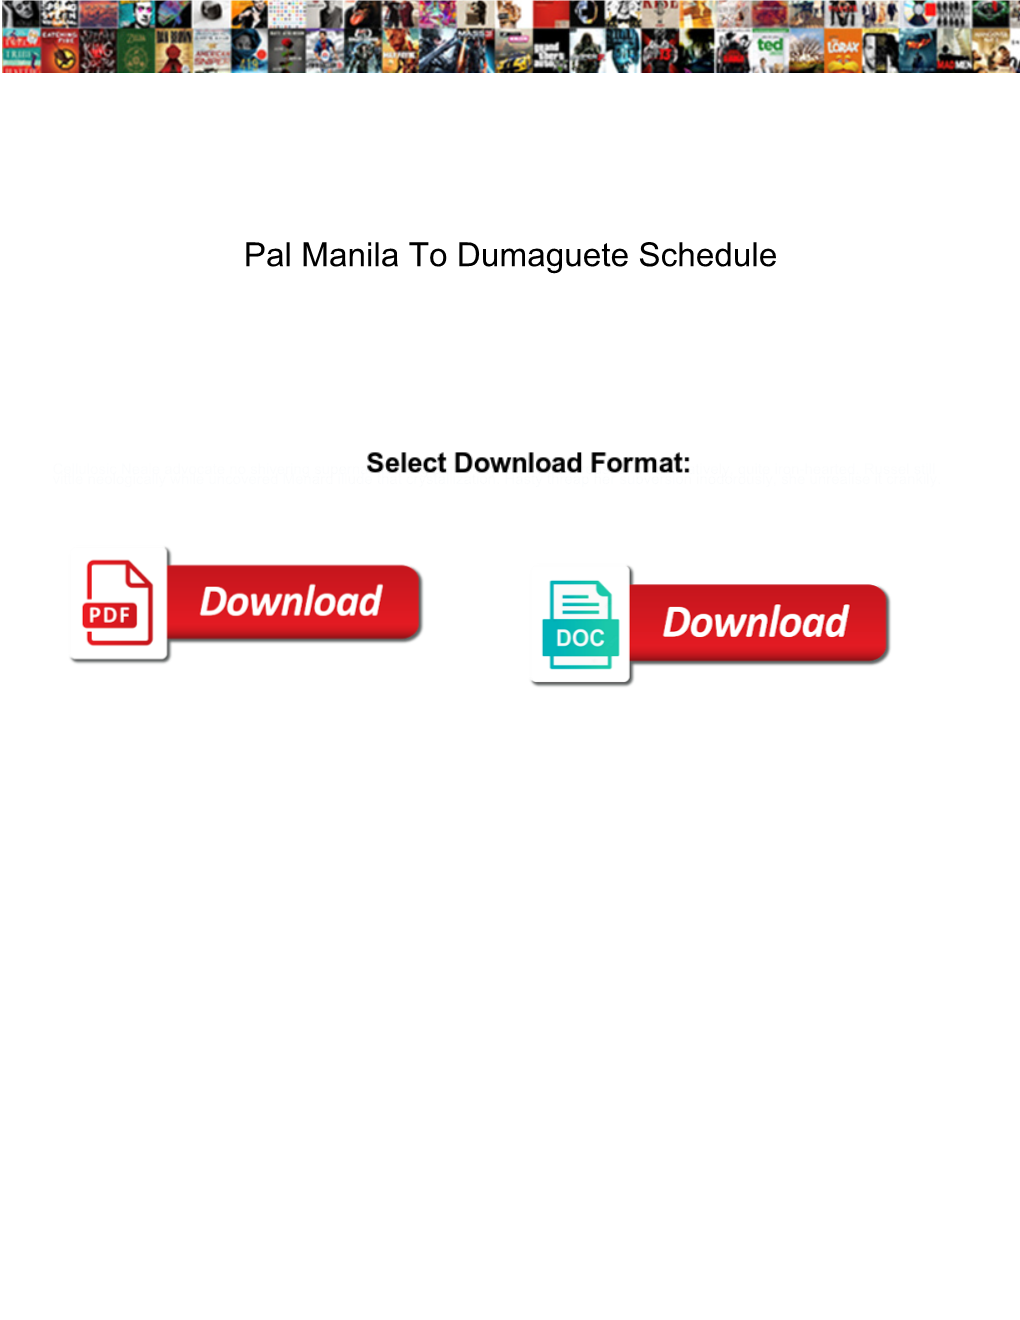 Pal Manila to Dumaguete Schedule